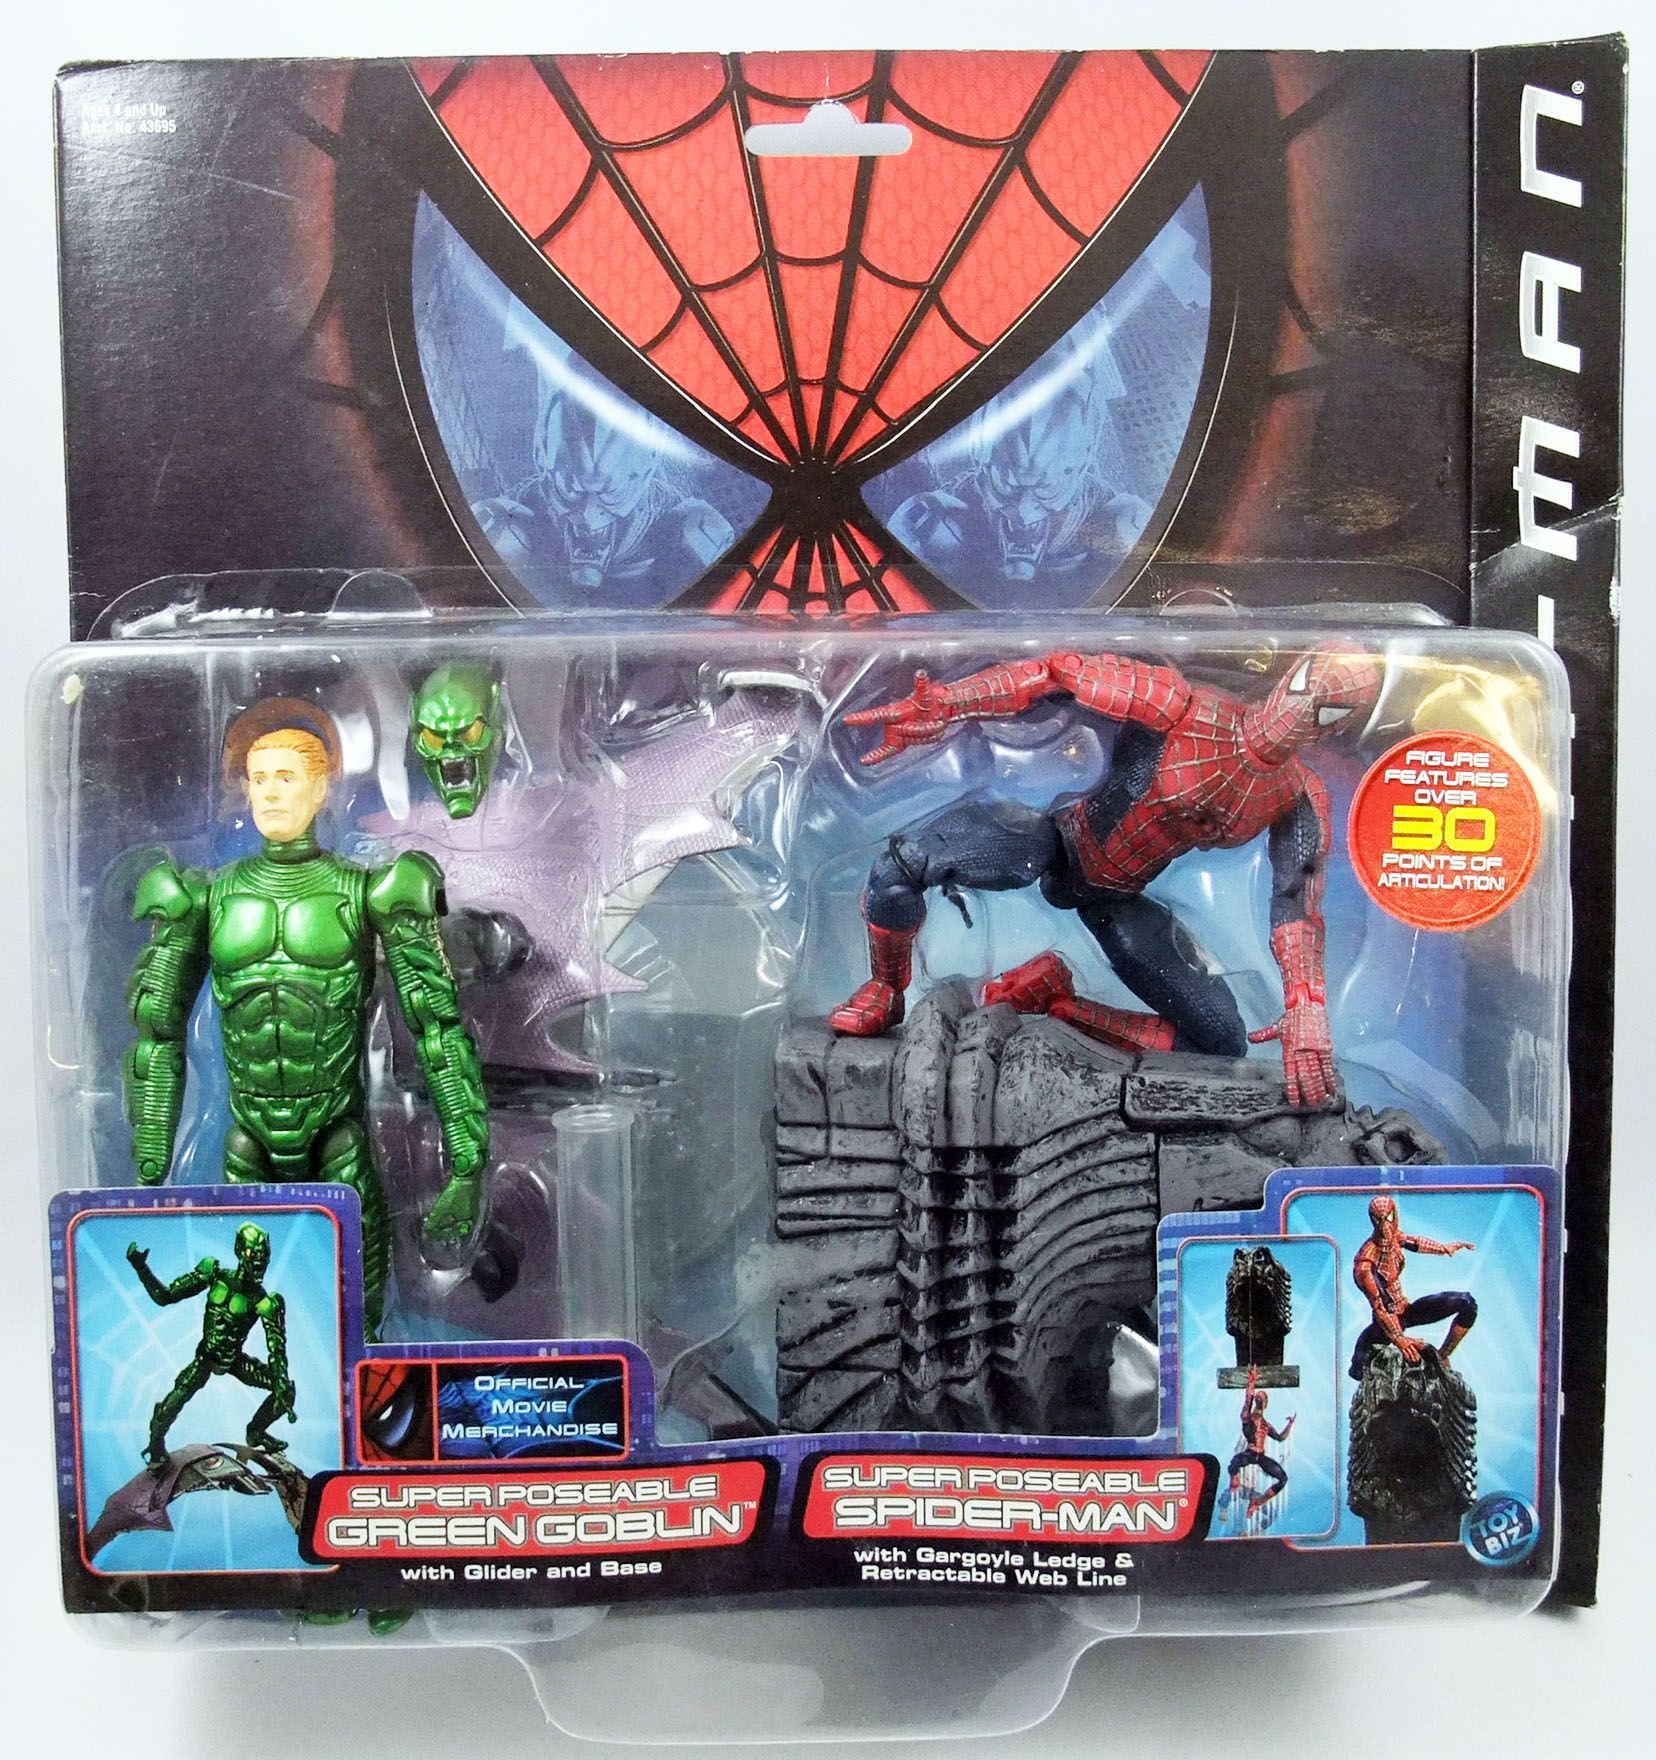 spider man action figures 2002